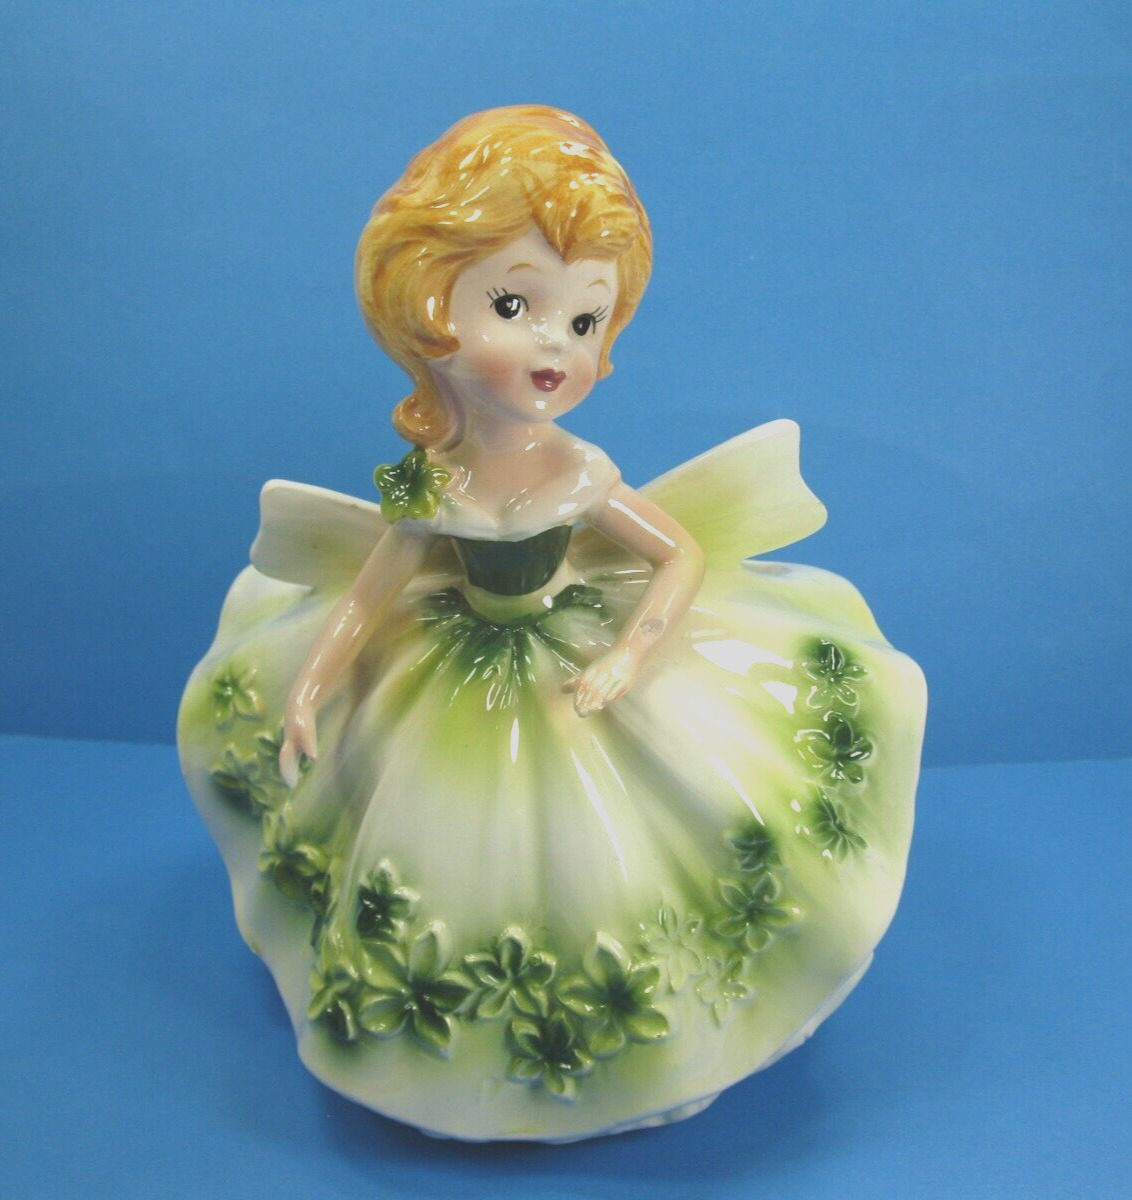 Relpo Planter Lady in Green Flower Dress Figurine #5835 Vintage READ